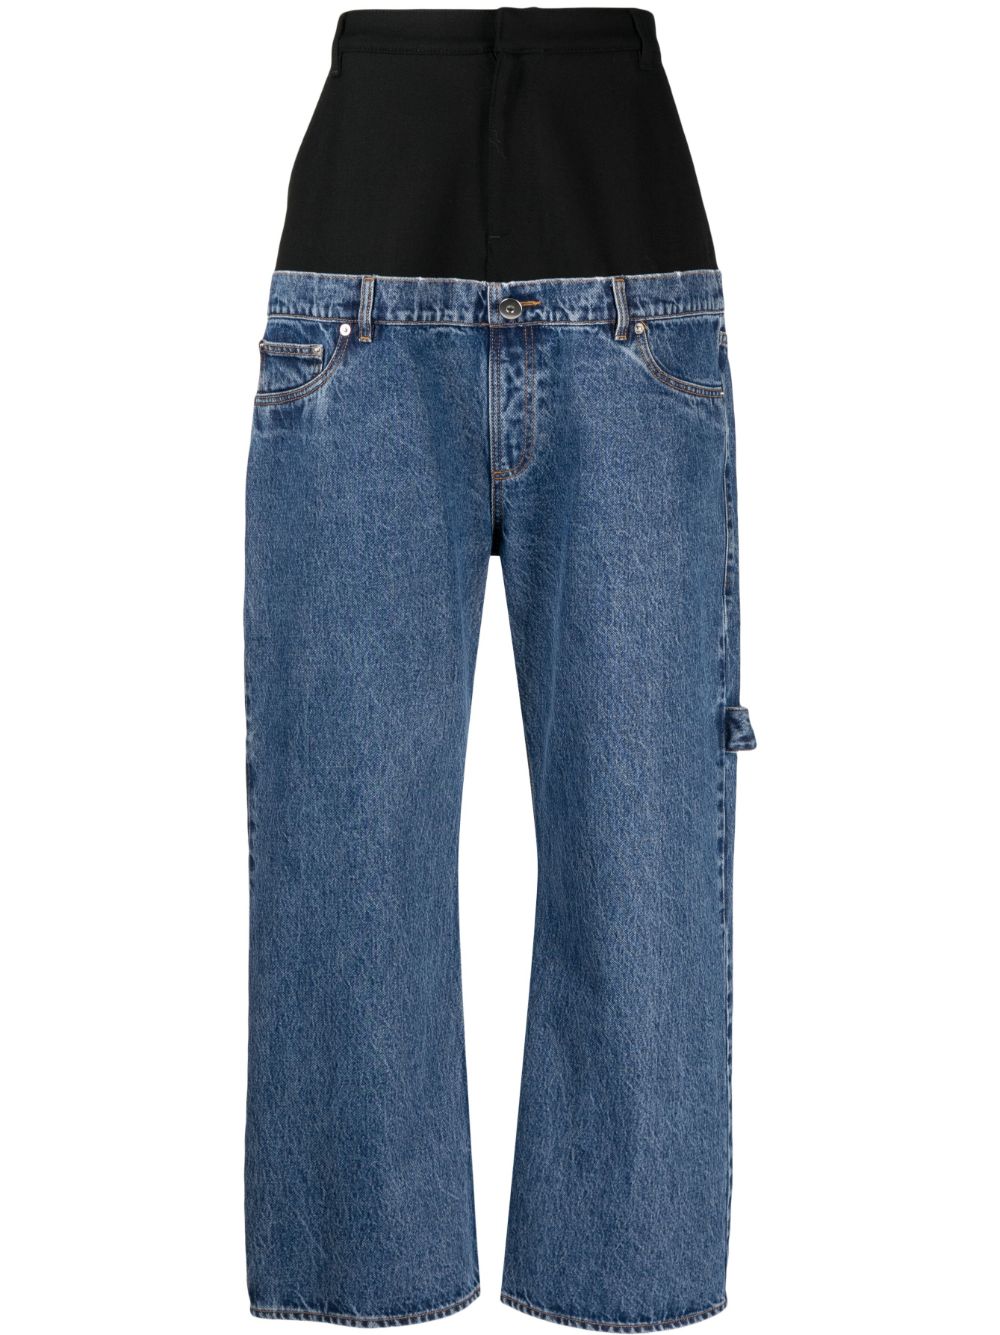 Hybrid Sag wide-leg jeans